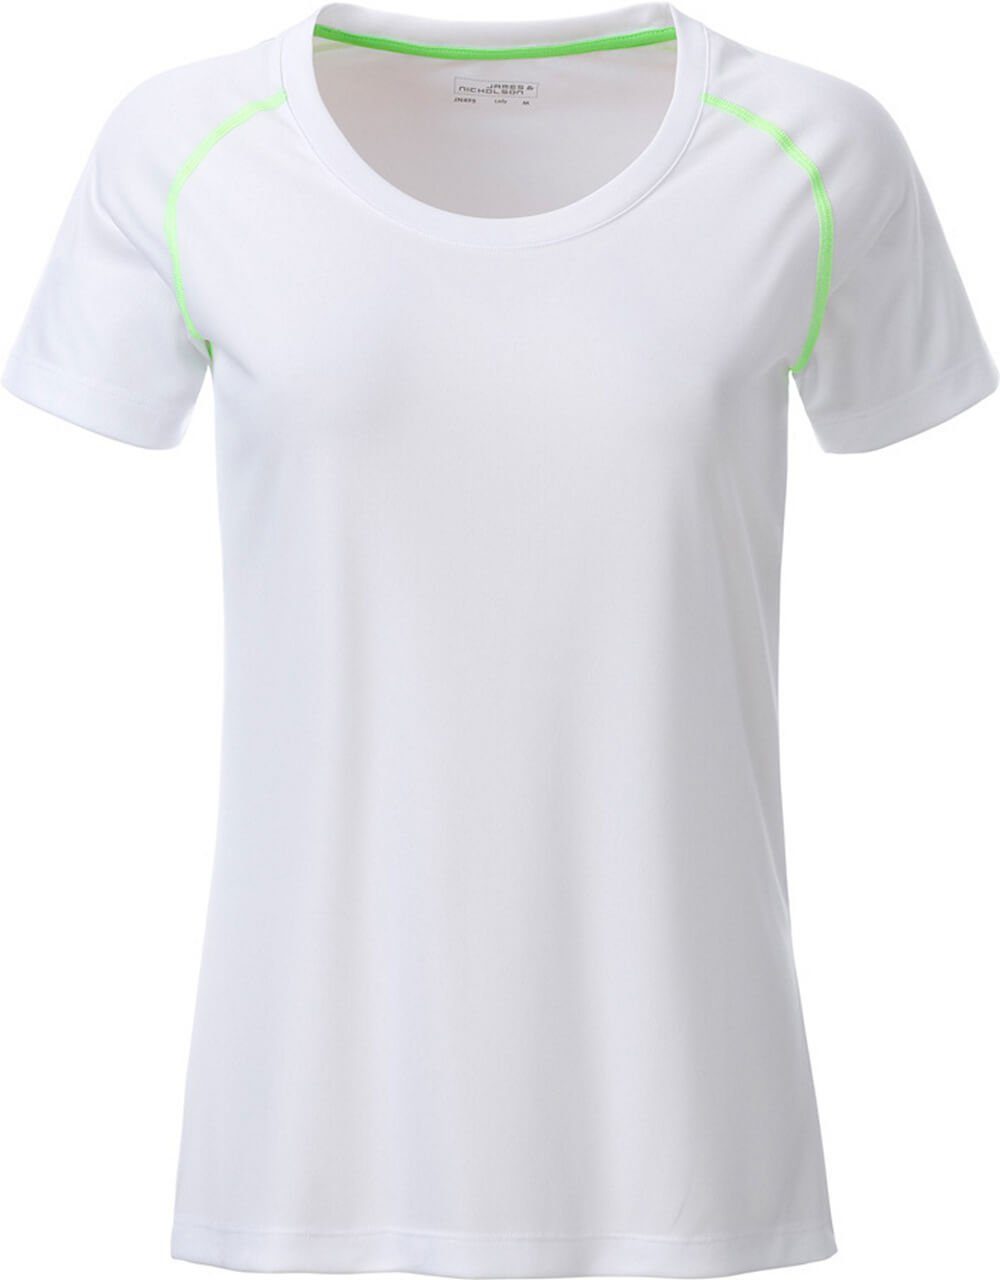 James & Nicholson Funktionsshirt James & Nicholson JN 495 Damen Funktions-Shirt schnell trocknend white/bright green